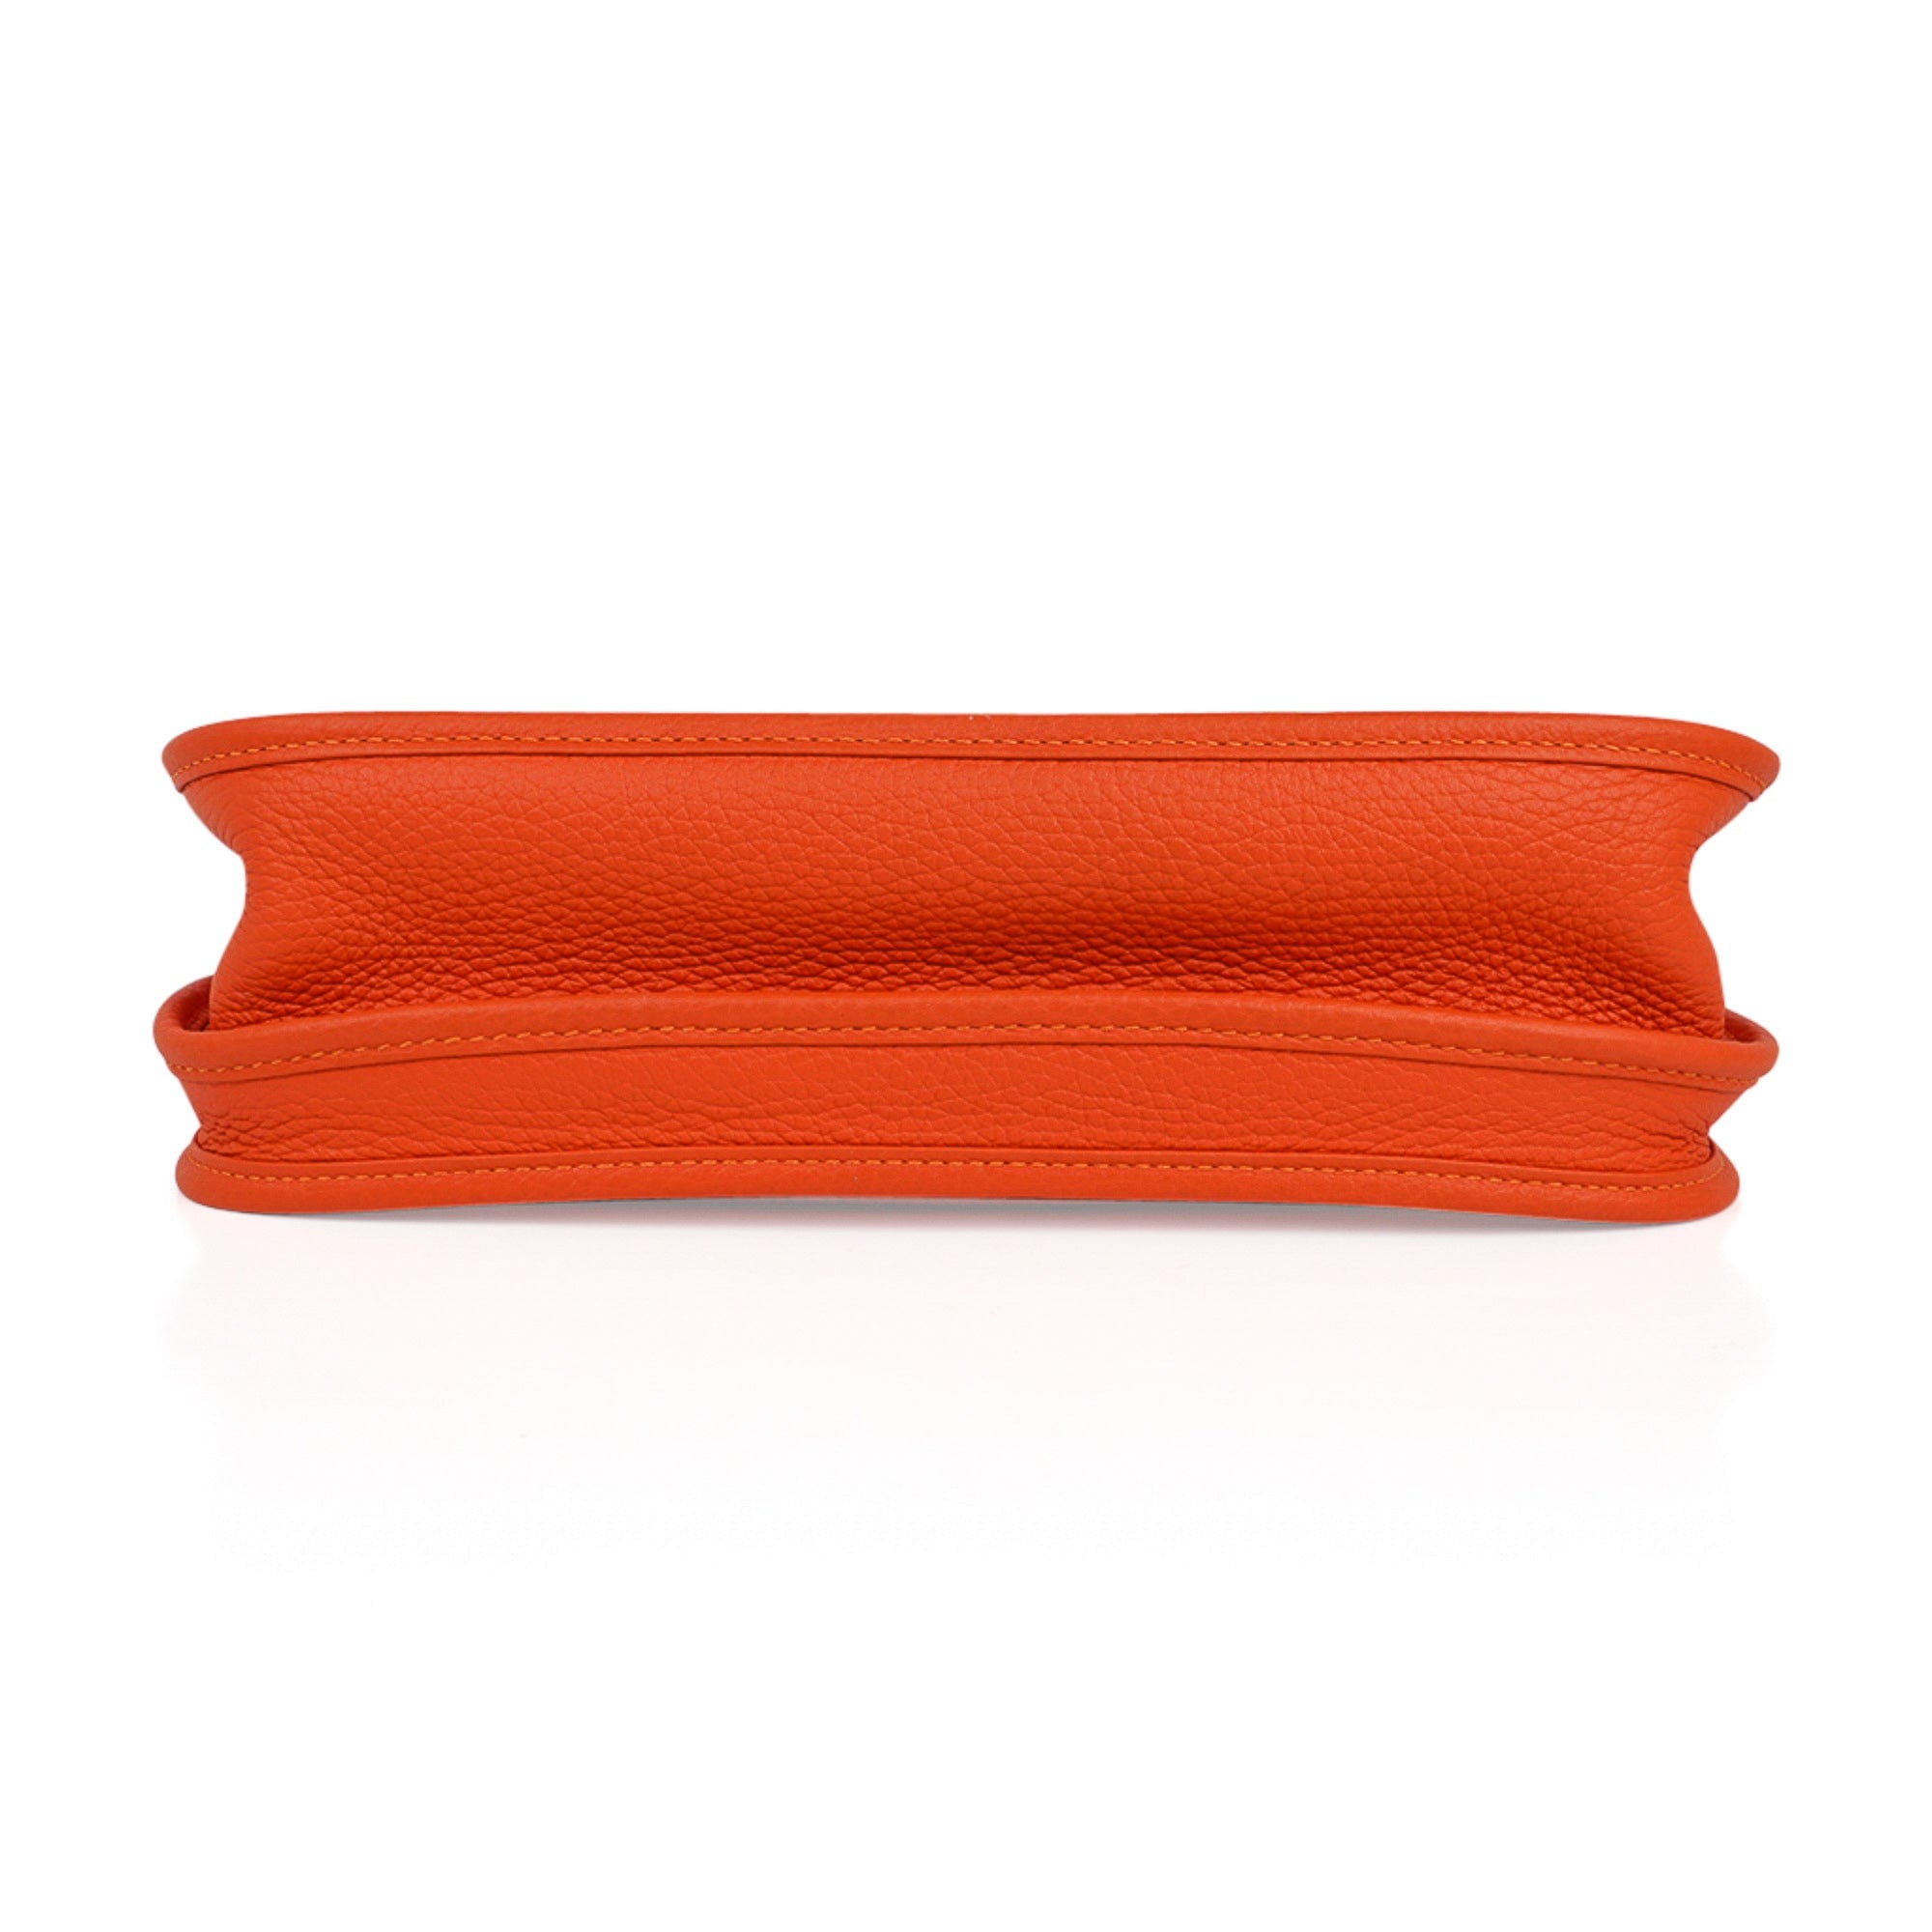 Hermès Evelyne Bag PM Orange Clemence Leather - Palladium